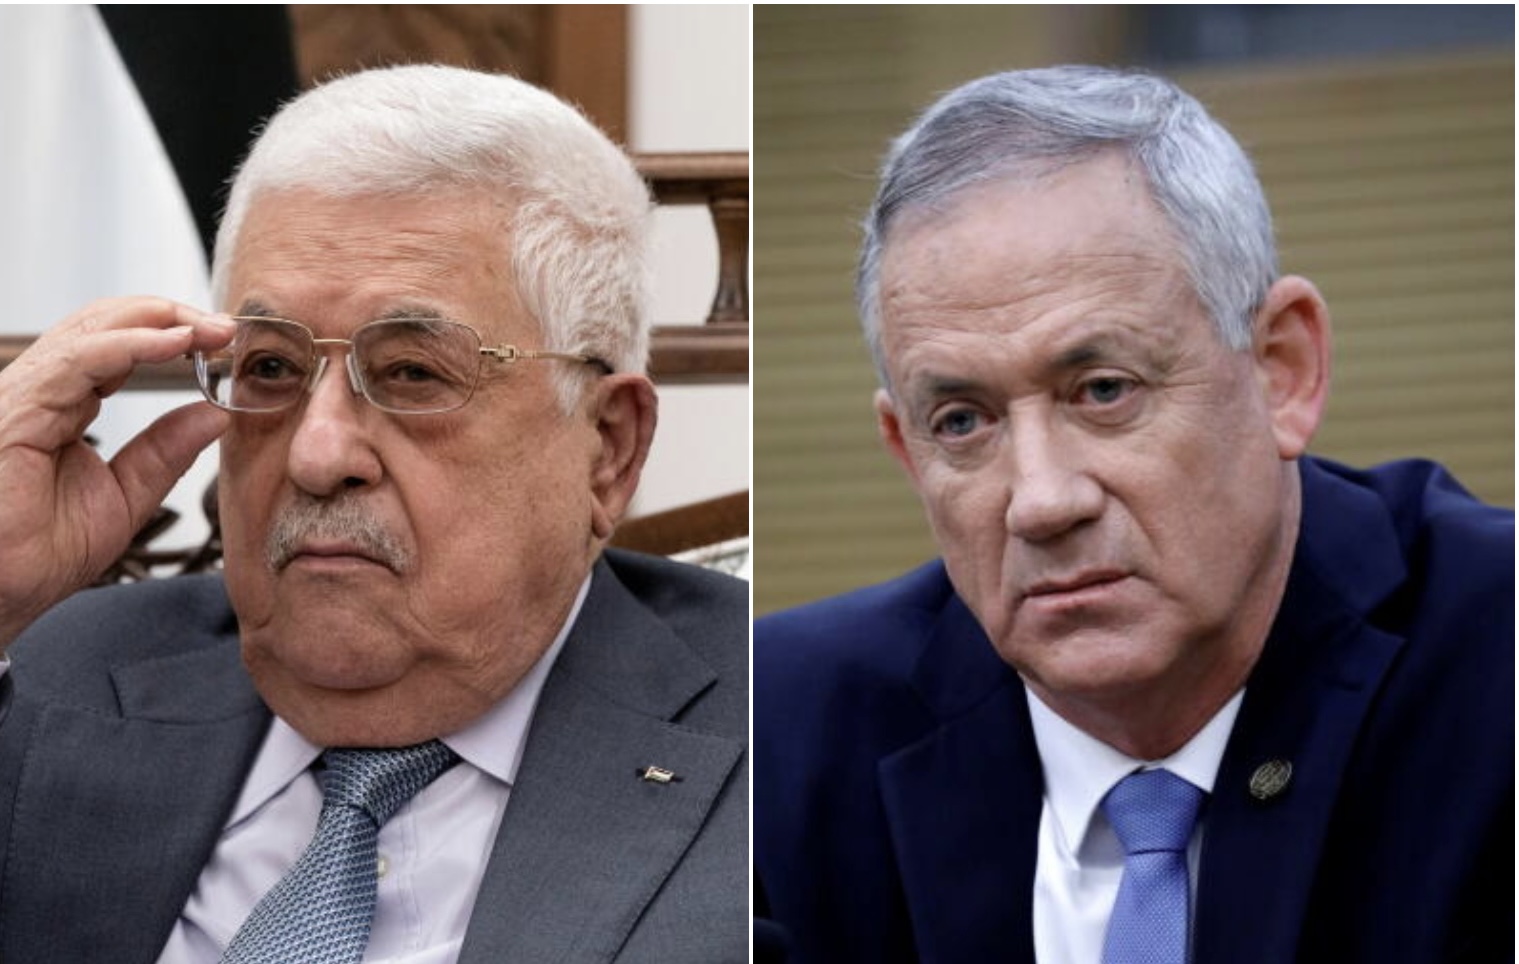 Perdana menteri palestin